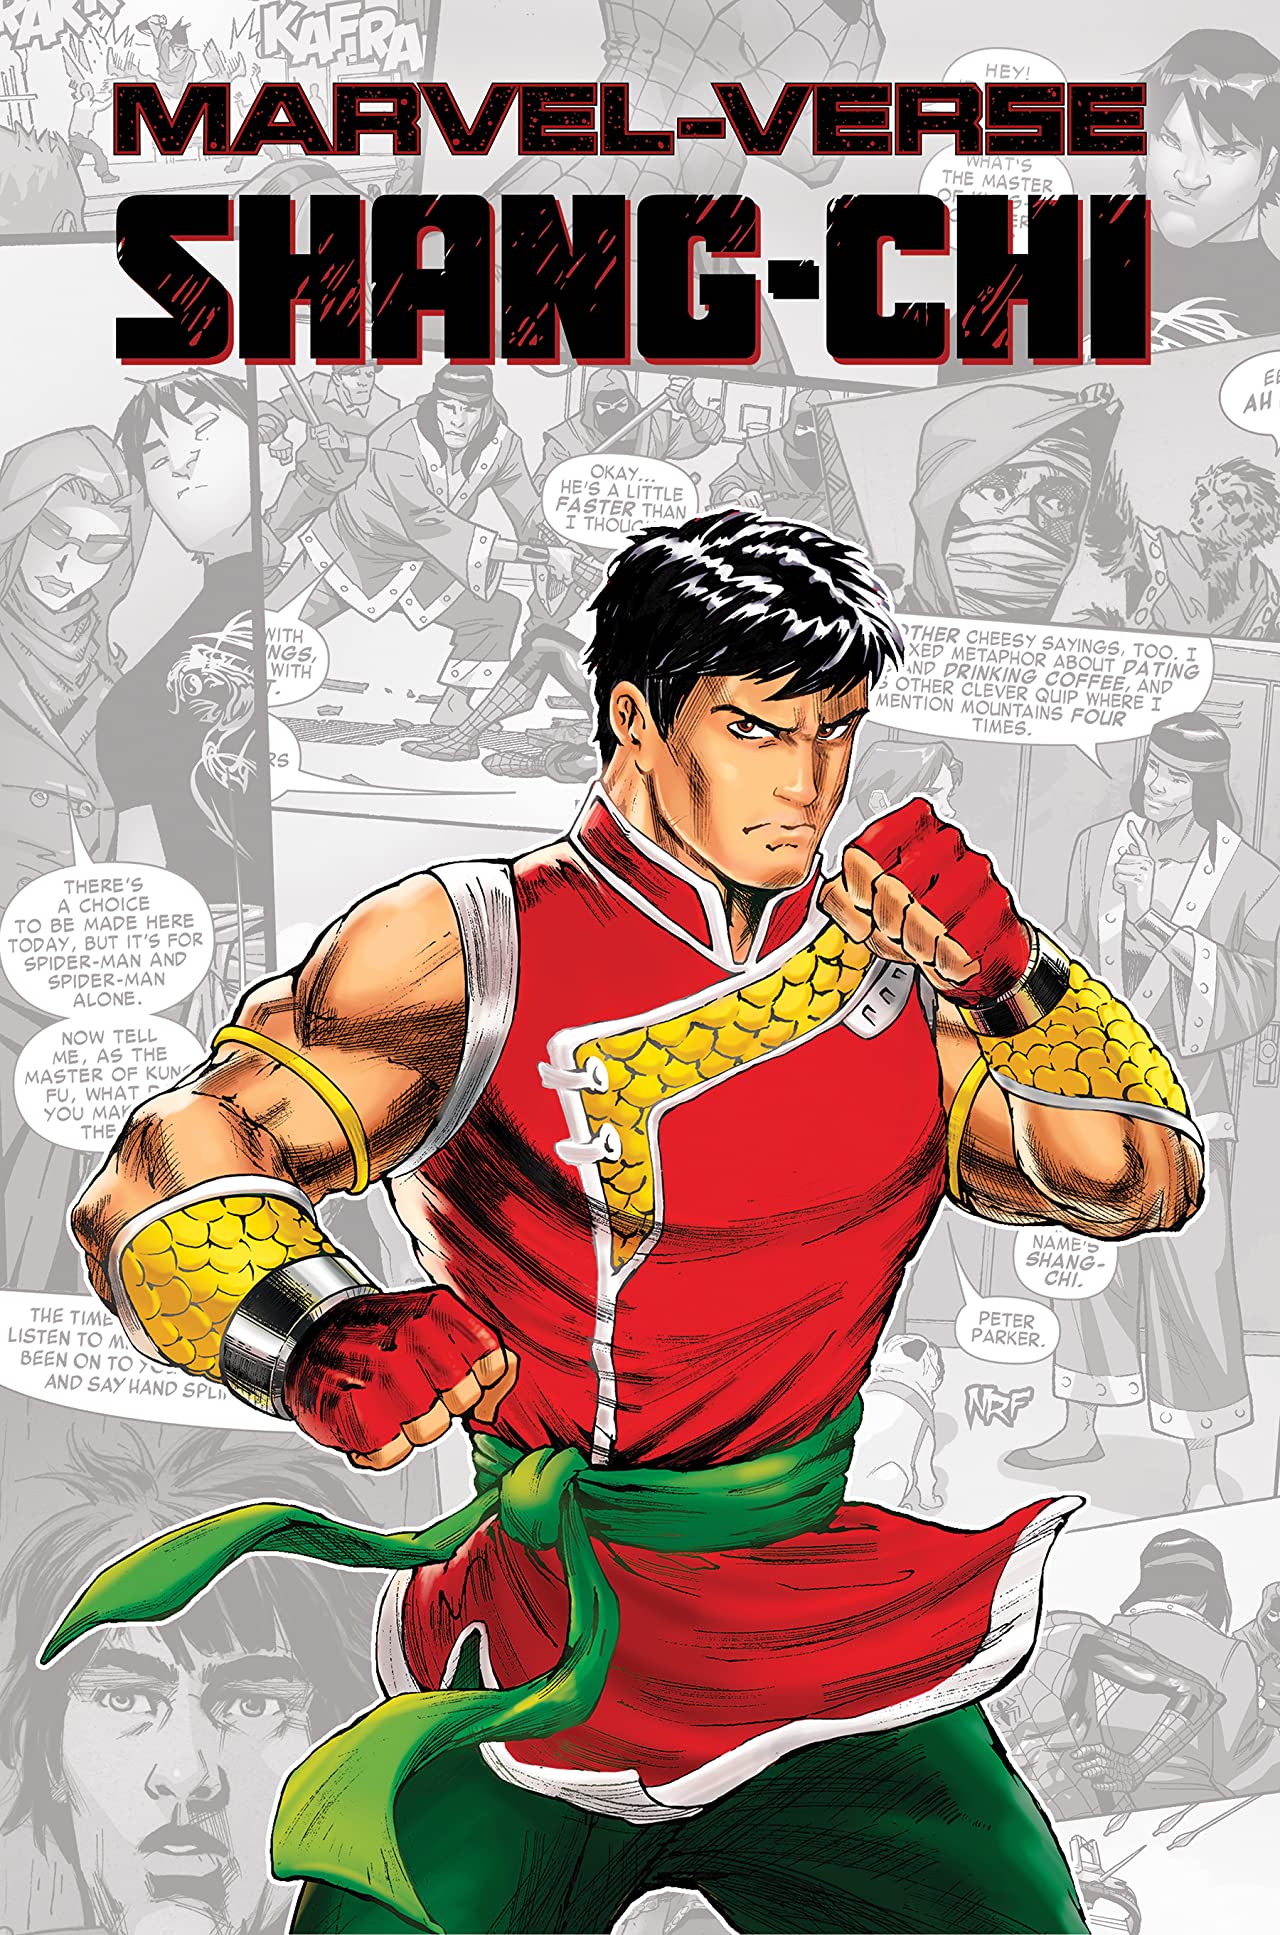 Marvel-Verse: Shang-Chi (Trade Paperback)